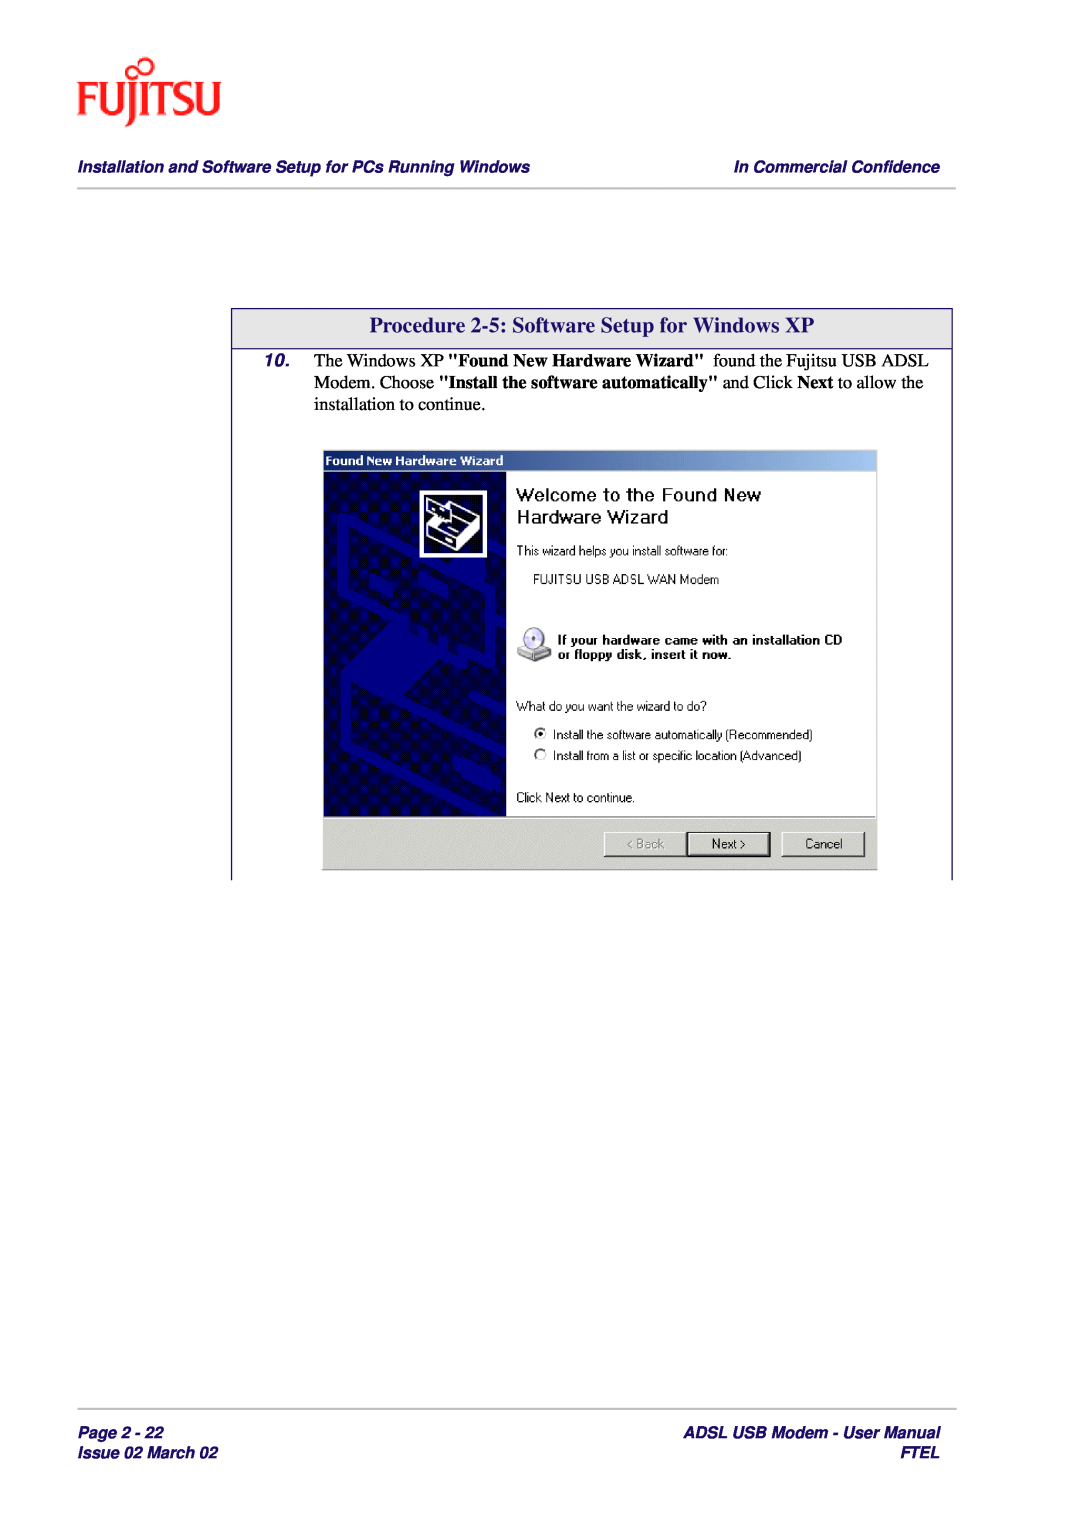 Fujitsu 3XAX-00803AAS Procedure 2-5 Software Setup for Windows XP, Installation and Software Setup for PCs Running Windows 